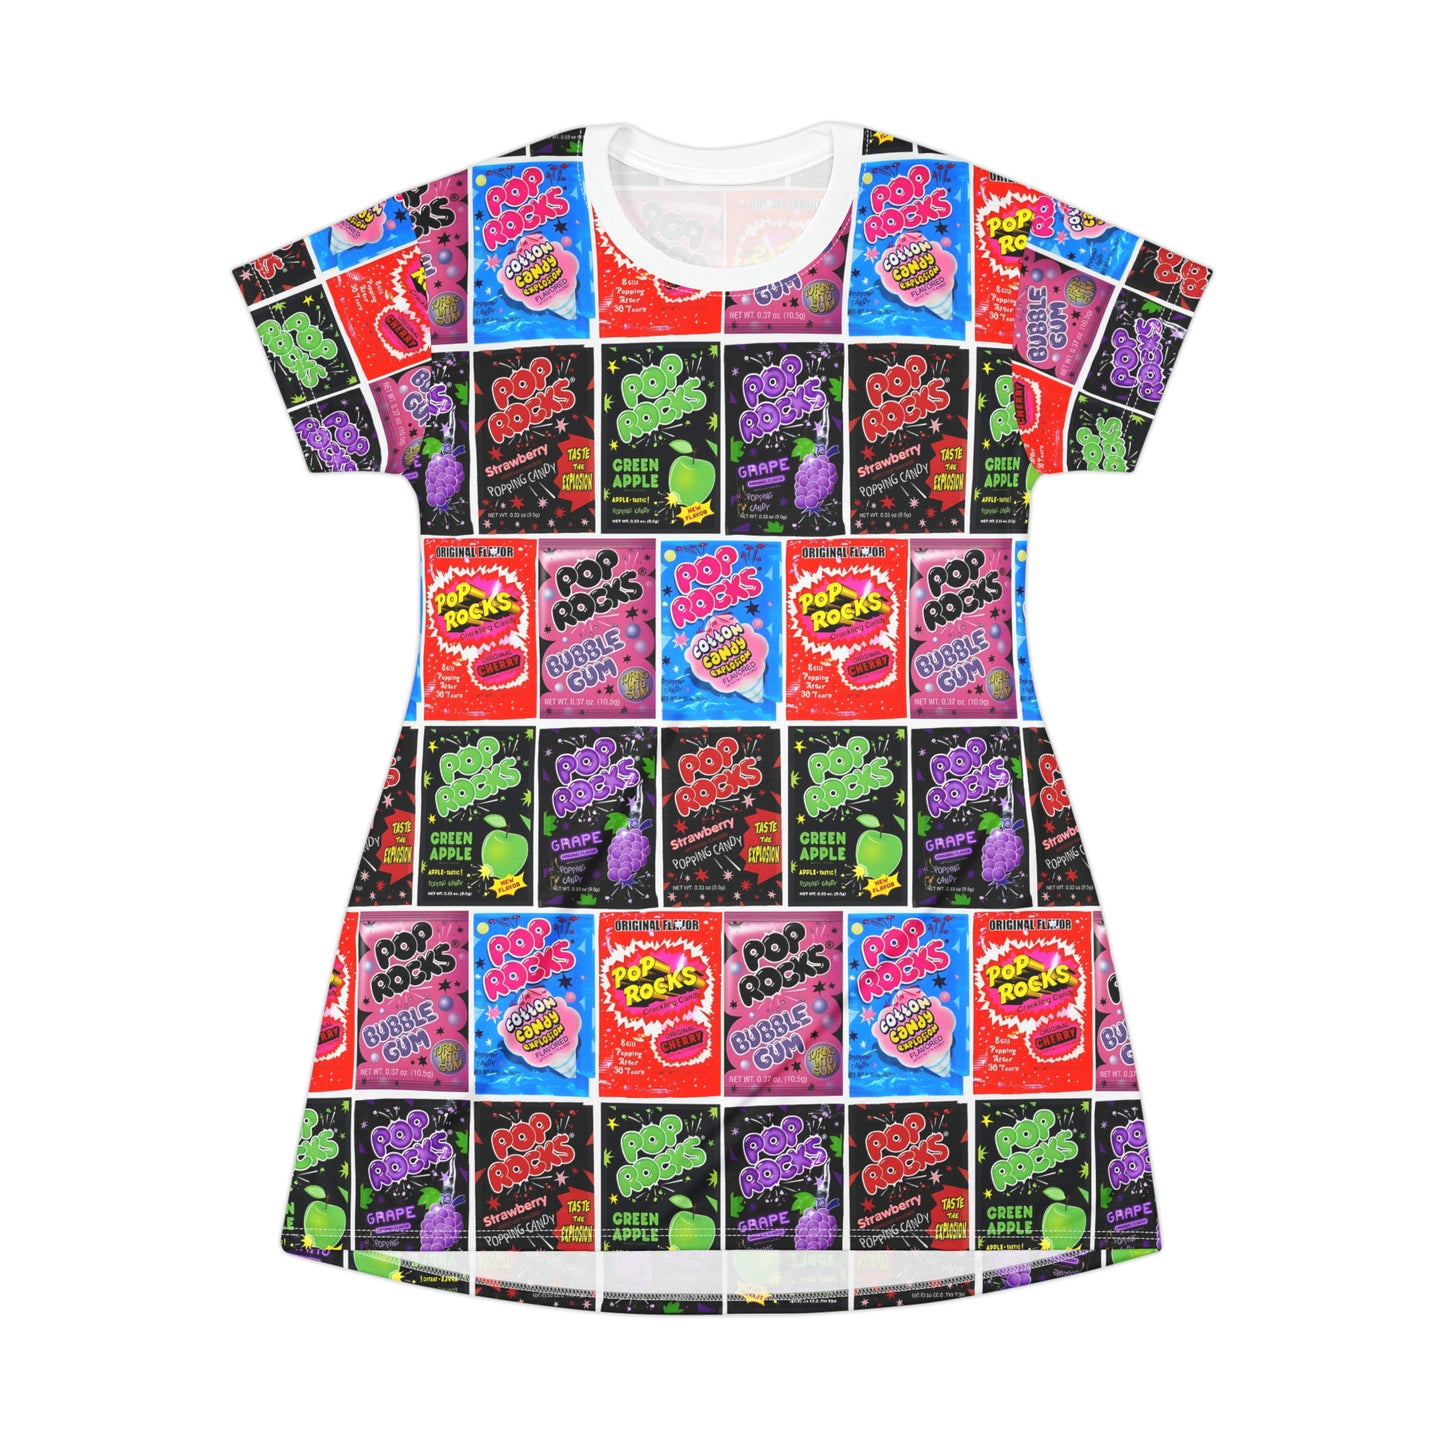 Pop Rocks Party T-Shirt Dress